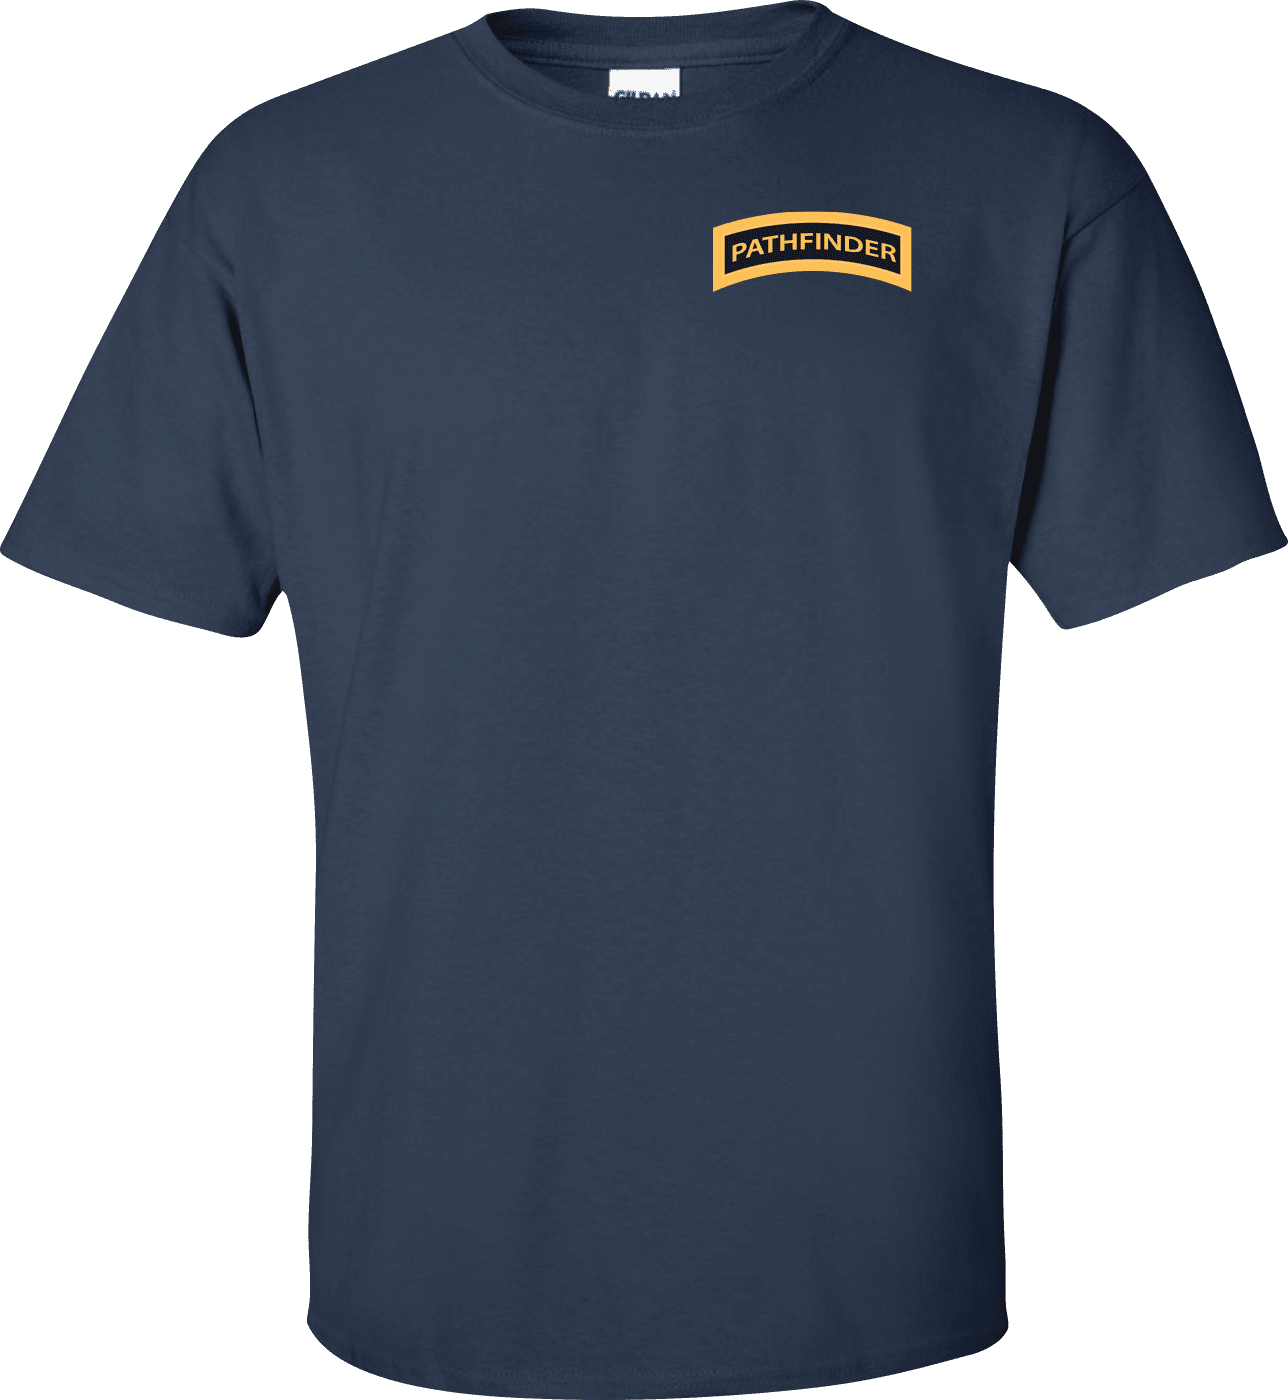 U.S. Army Pathfinder Tab T-shirt - Walmart.com